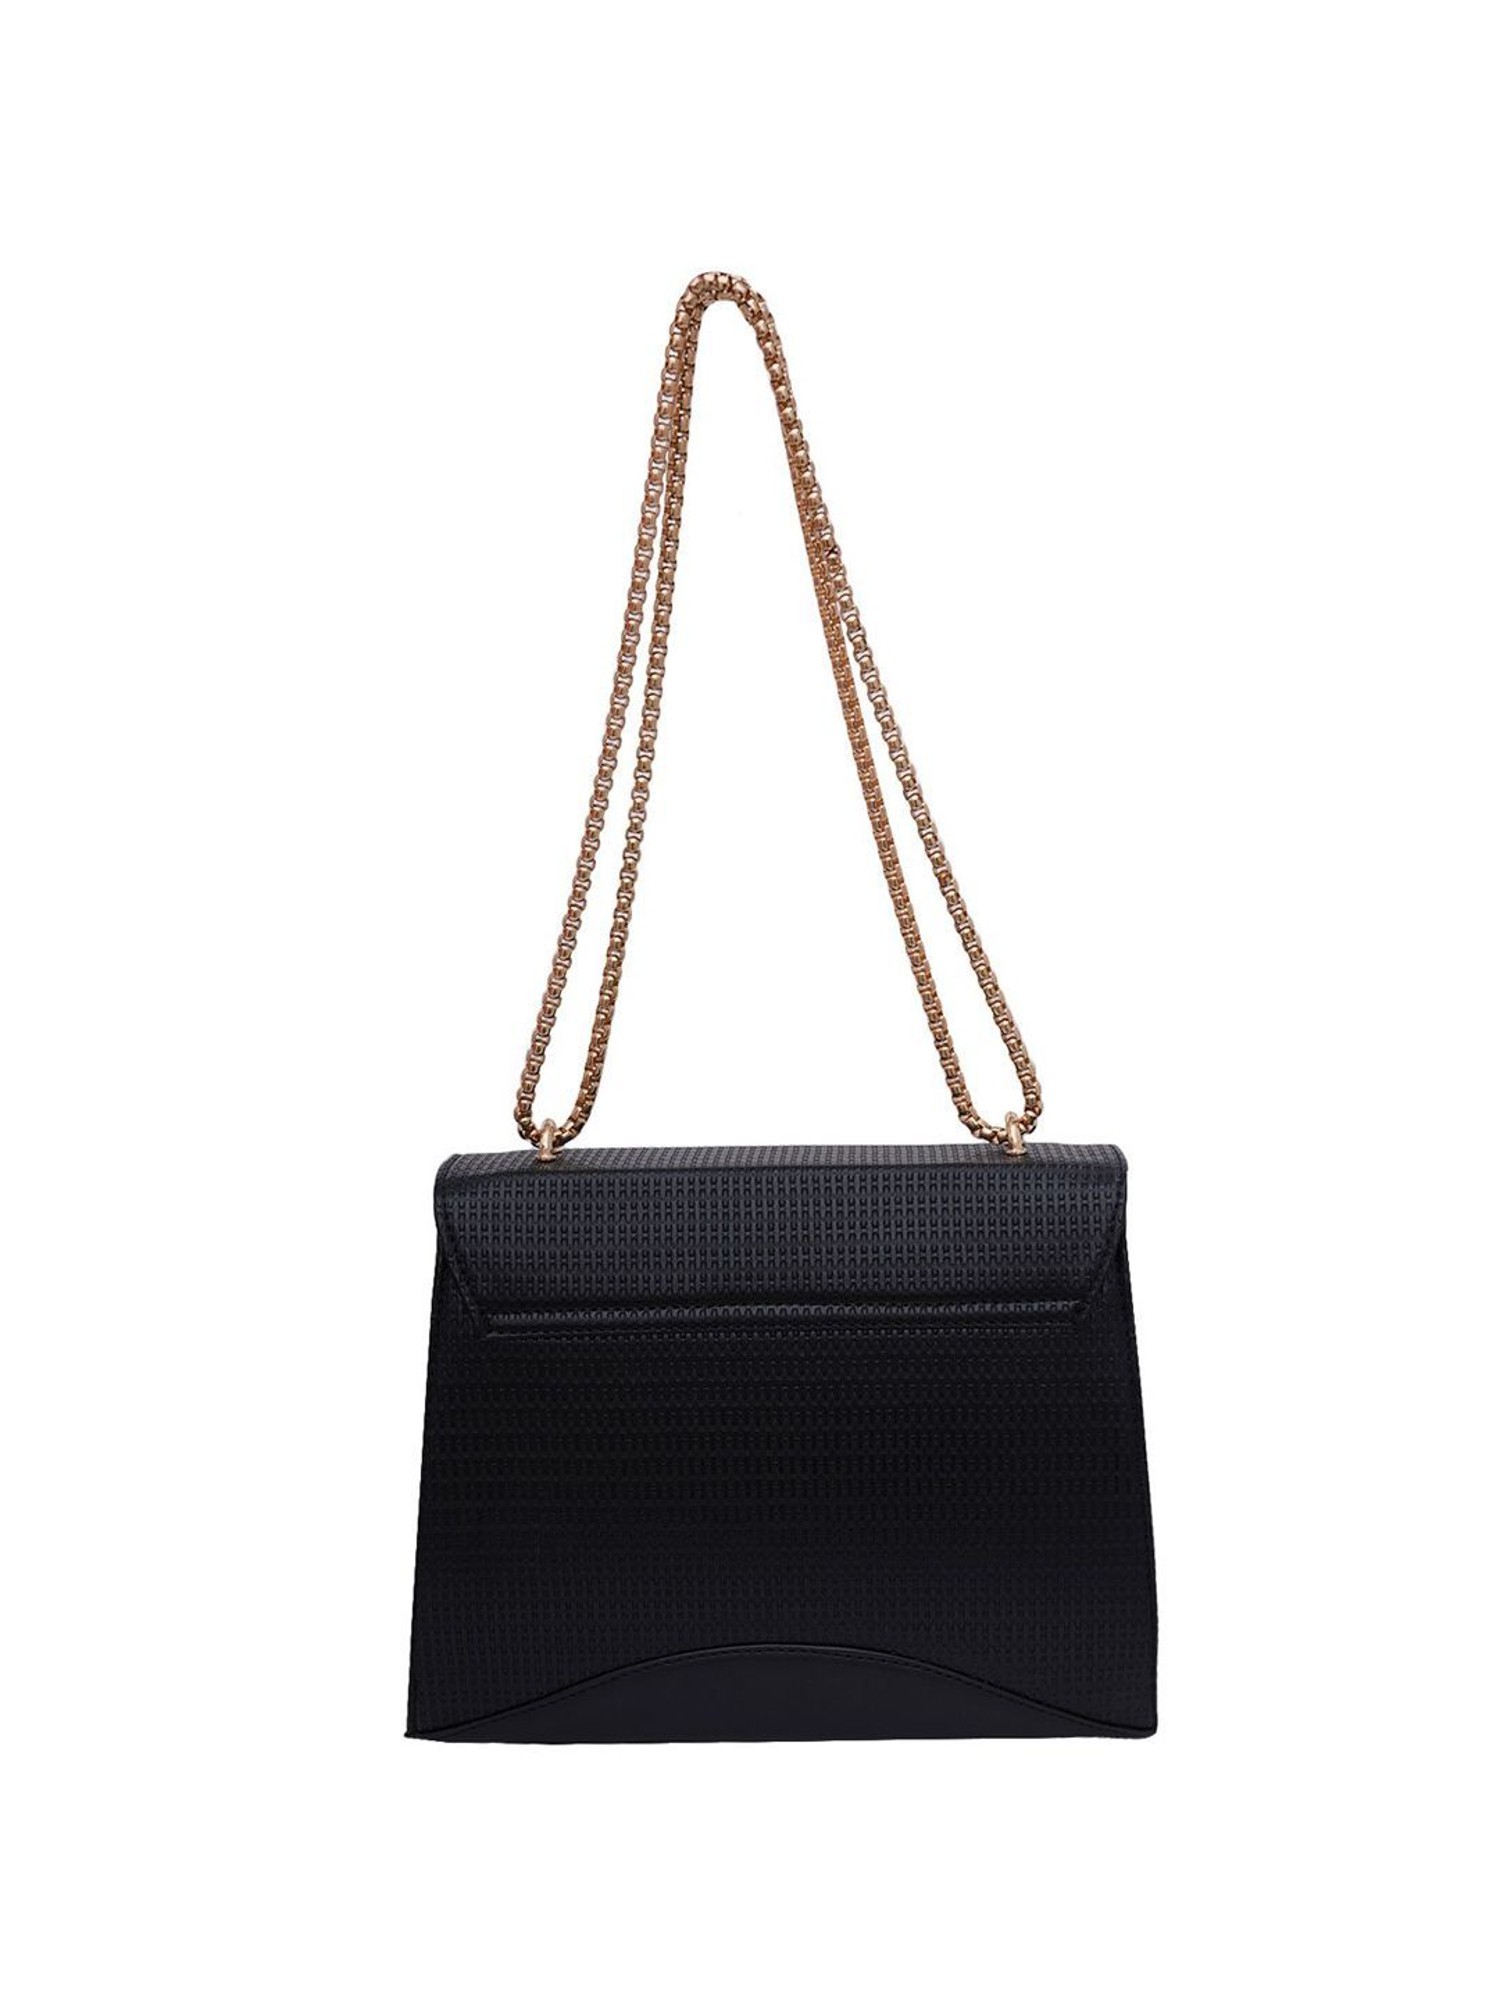 Buy KAZO Brown Solid Handbag at Redfynd